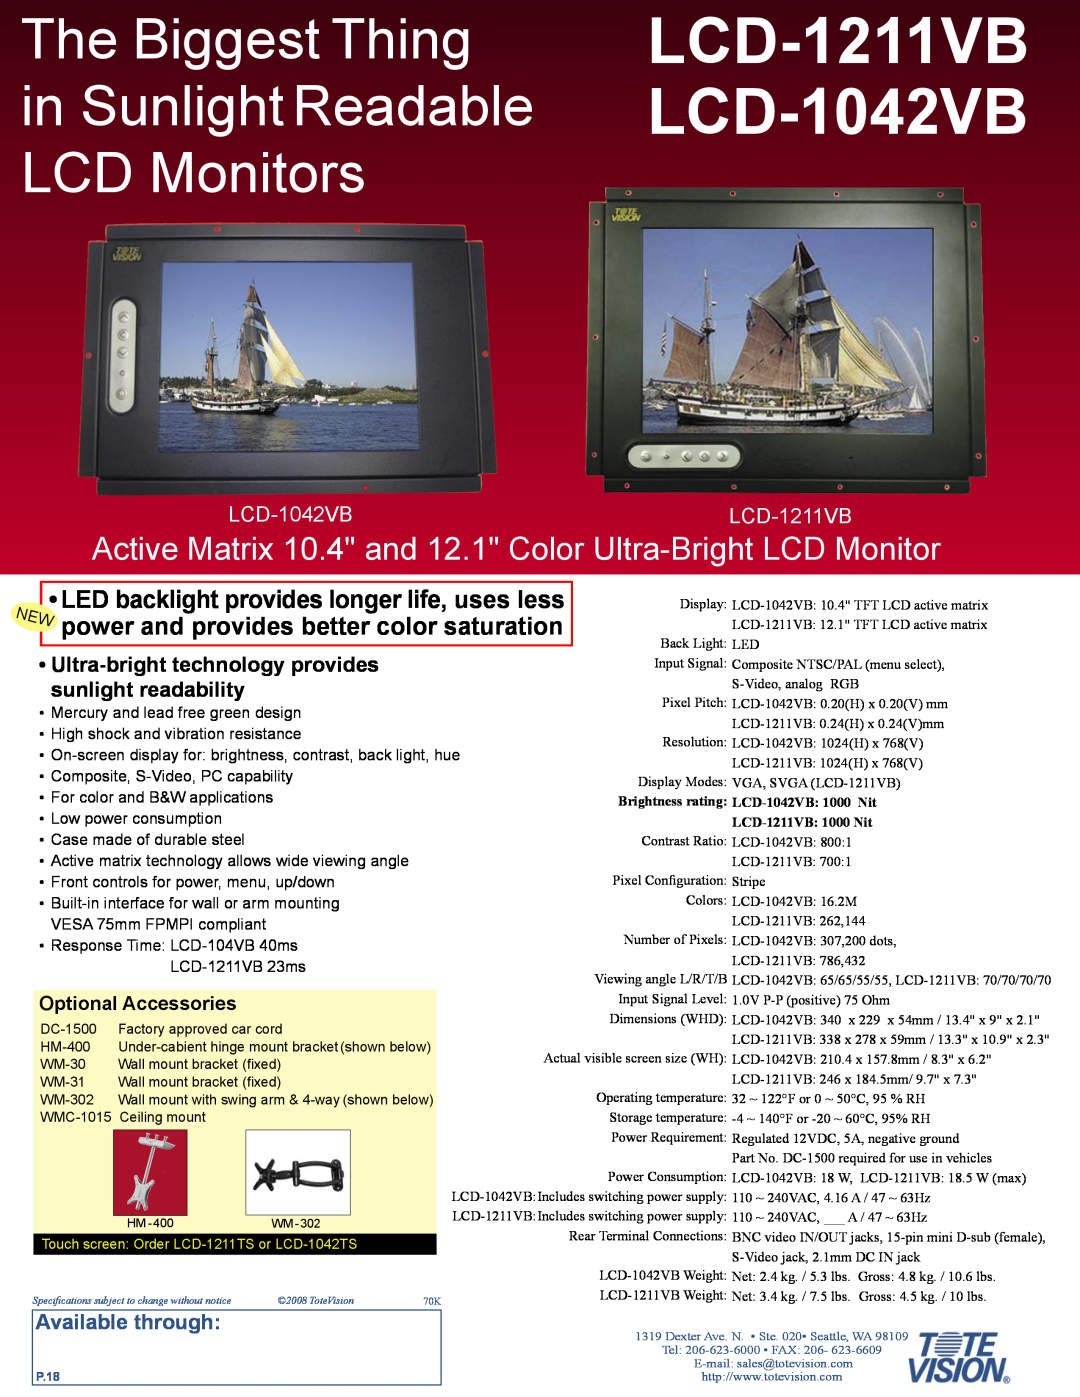 Tote Vision LCD-1042TS, LCD-1211TS dimensions LCD-1211VB LCD-1042VB, The Biggest Thing in Sunlight Readable LCD Monitors 